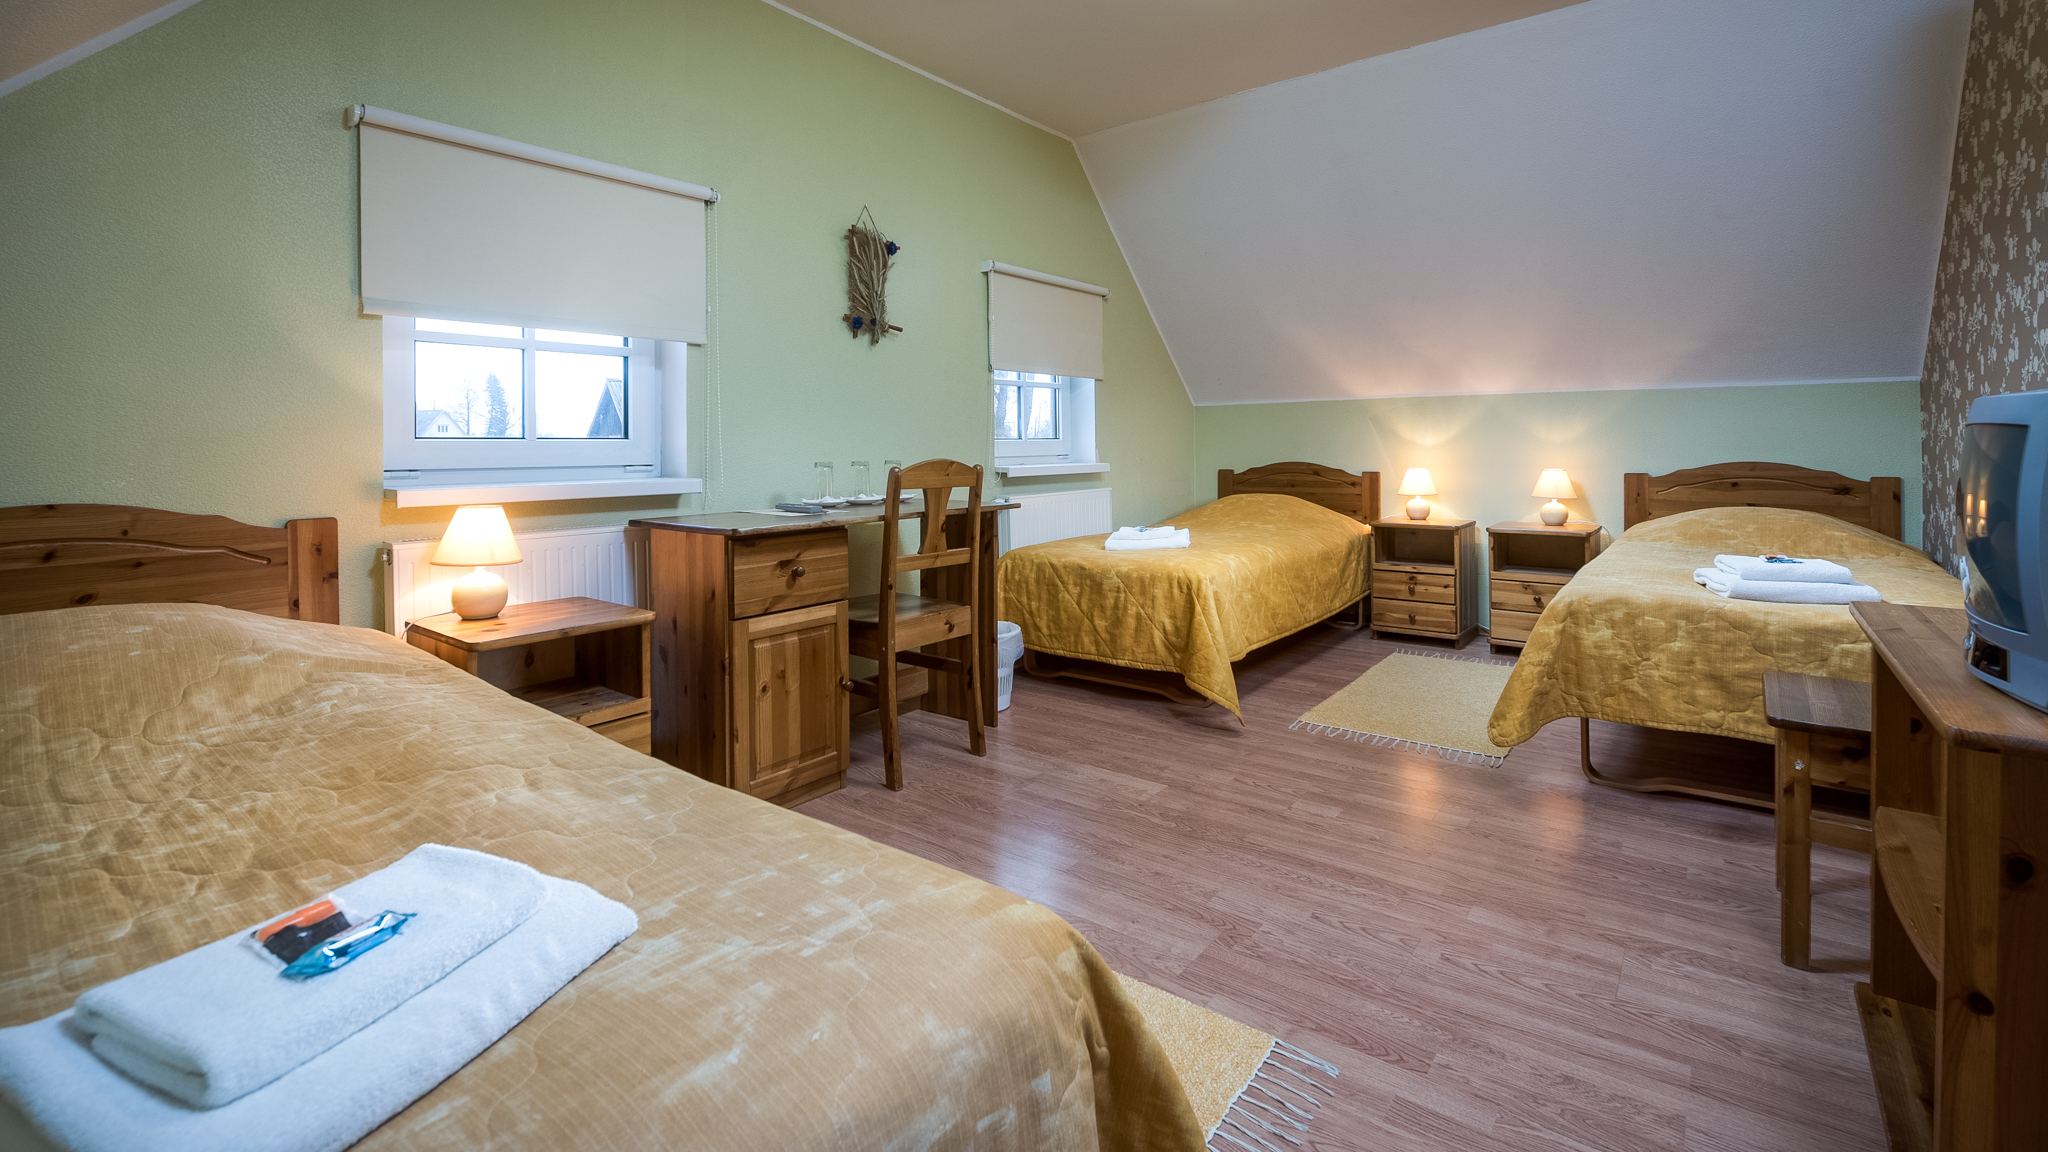 TRIPLE ROOM THREE SINGLE BEDS (start from 35€/night)